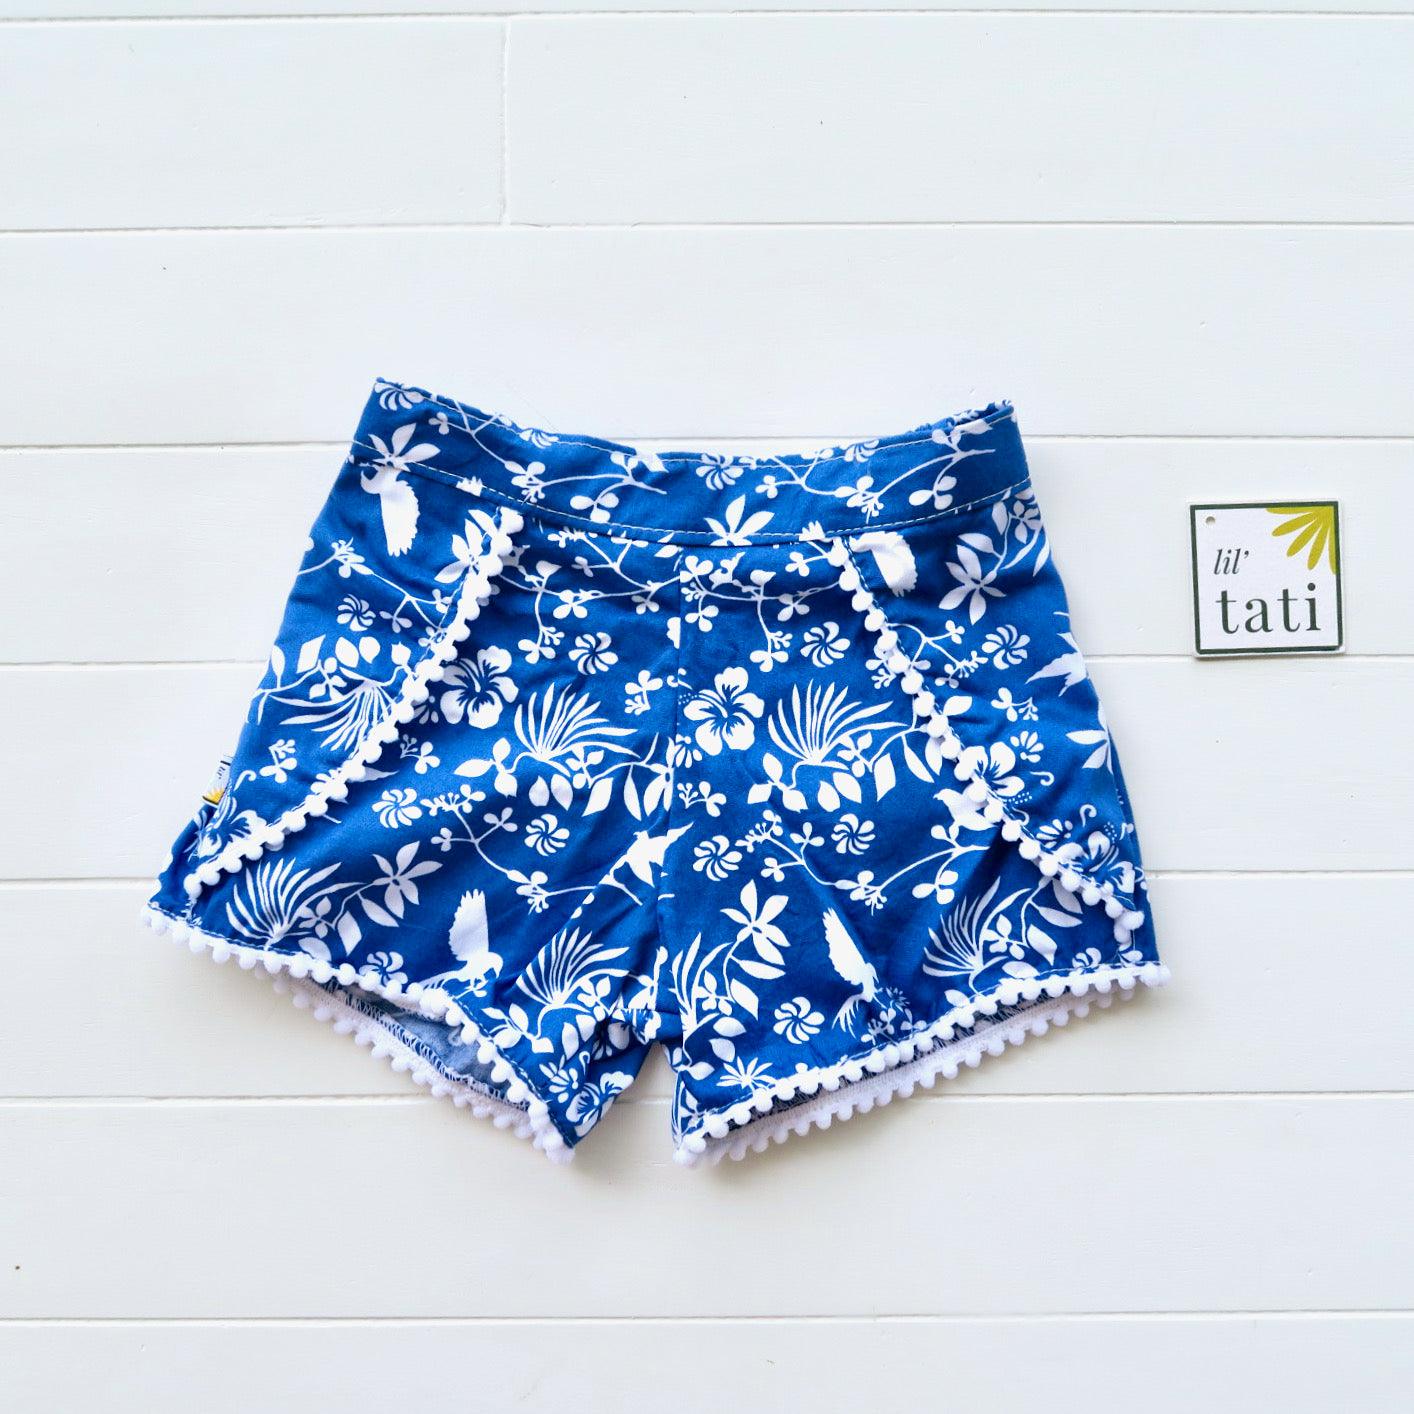 Pompom Shorts in Blue Bird Garden - Lil' Tati